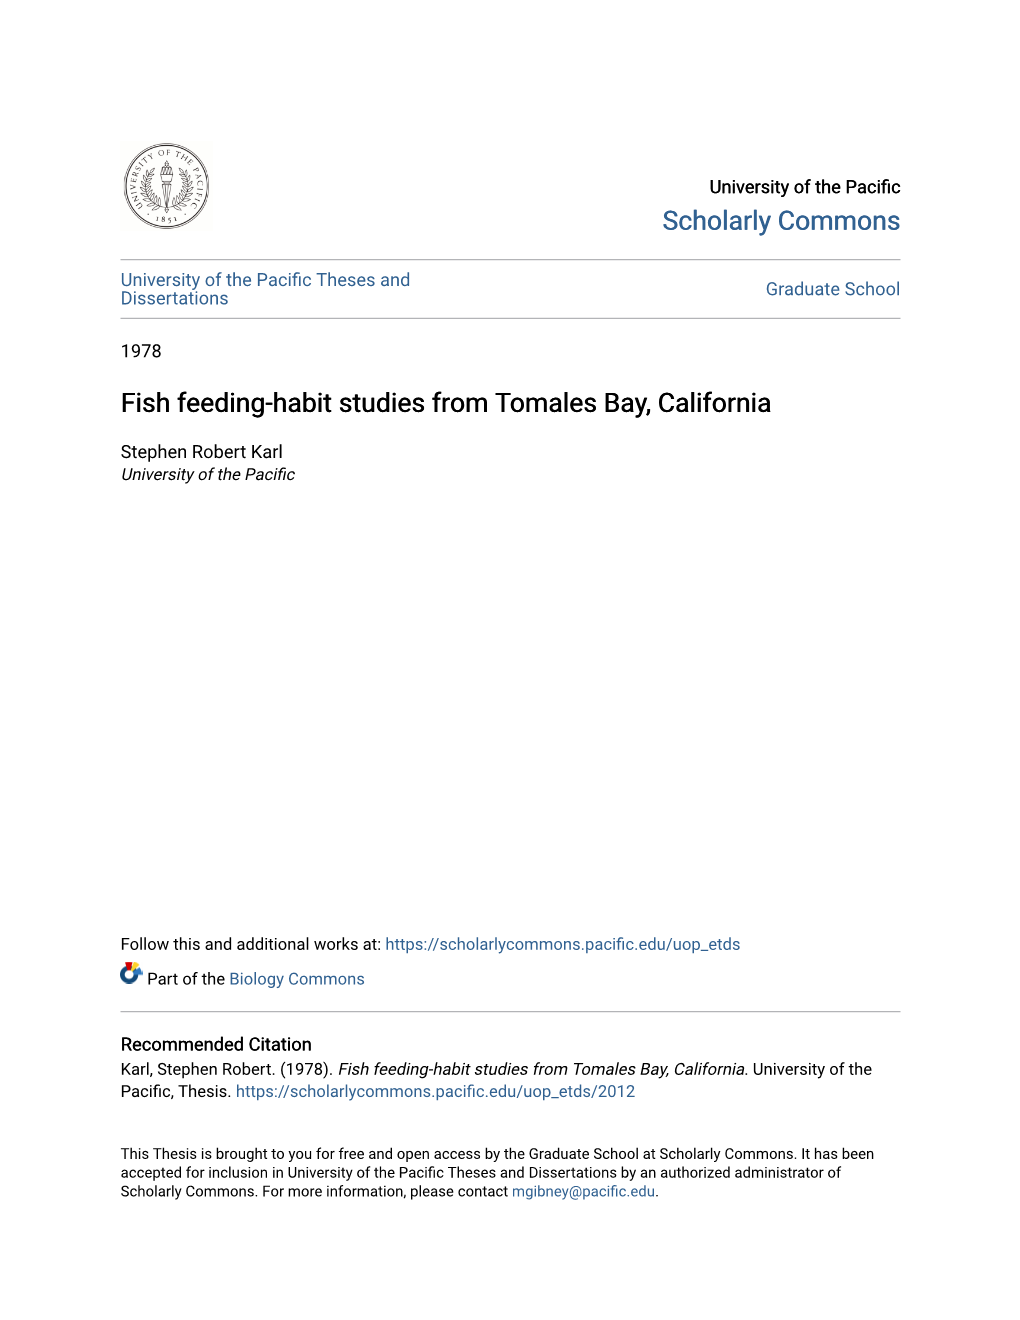 Fish Feeding-Habit Studies from Tomales Bay, California